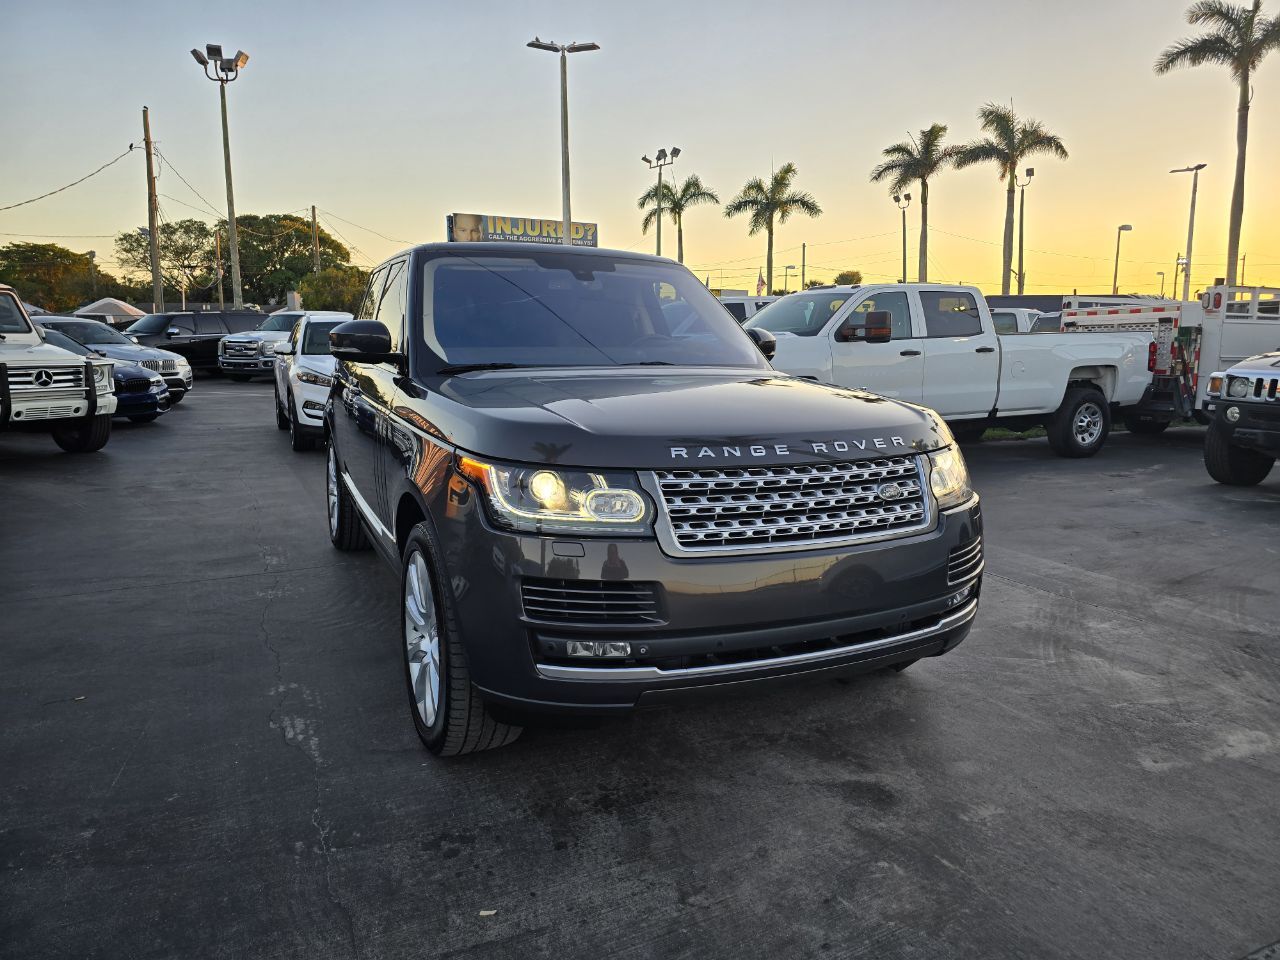 2015 LAND ROVER Range Rover SUV / Crossover - $29,900